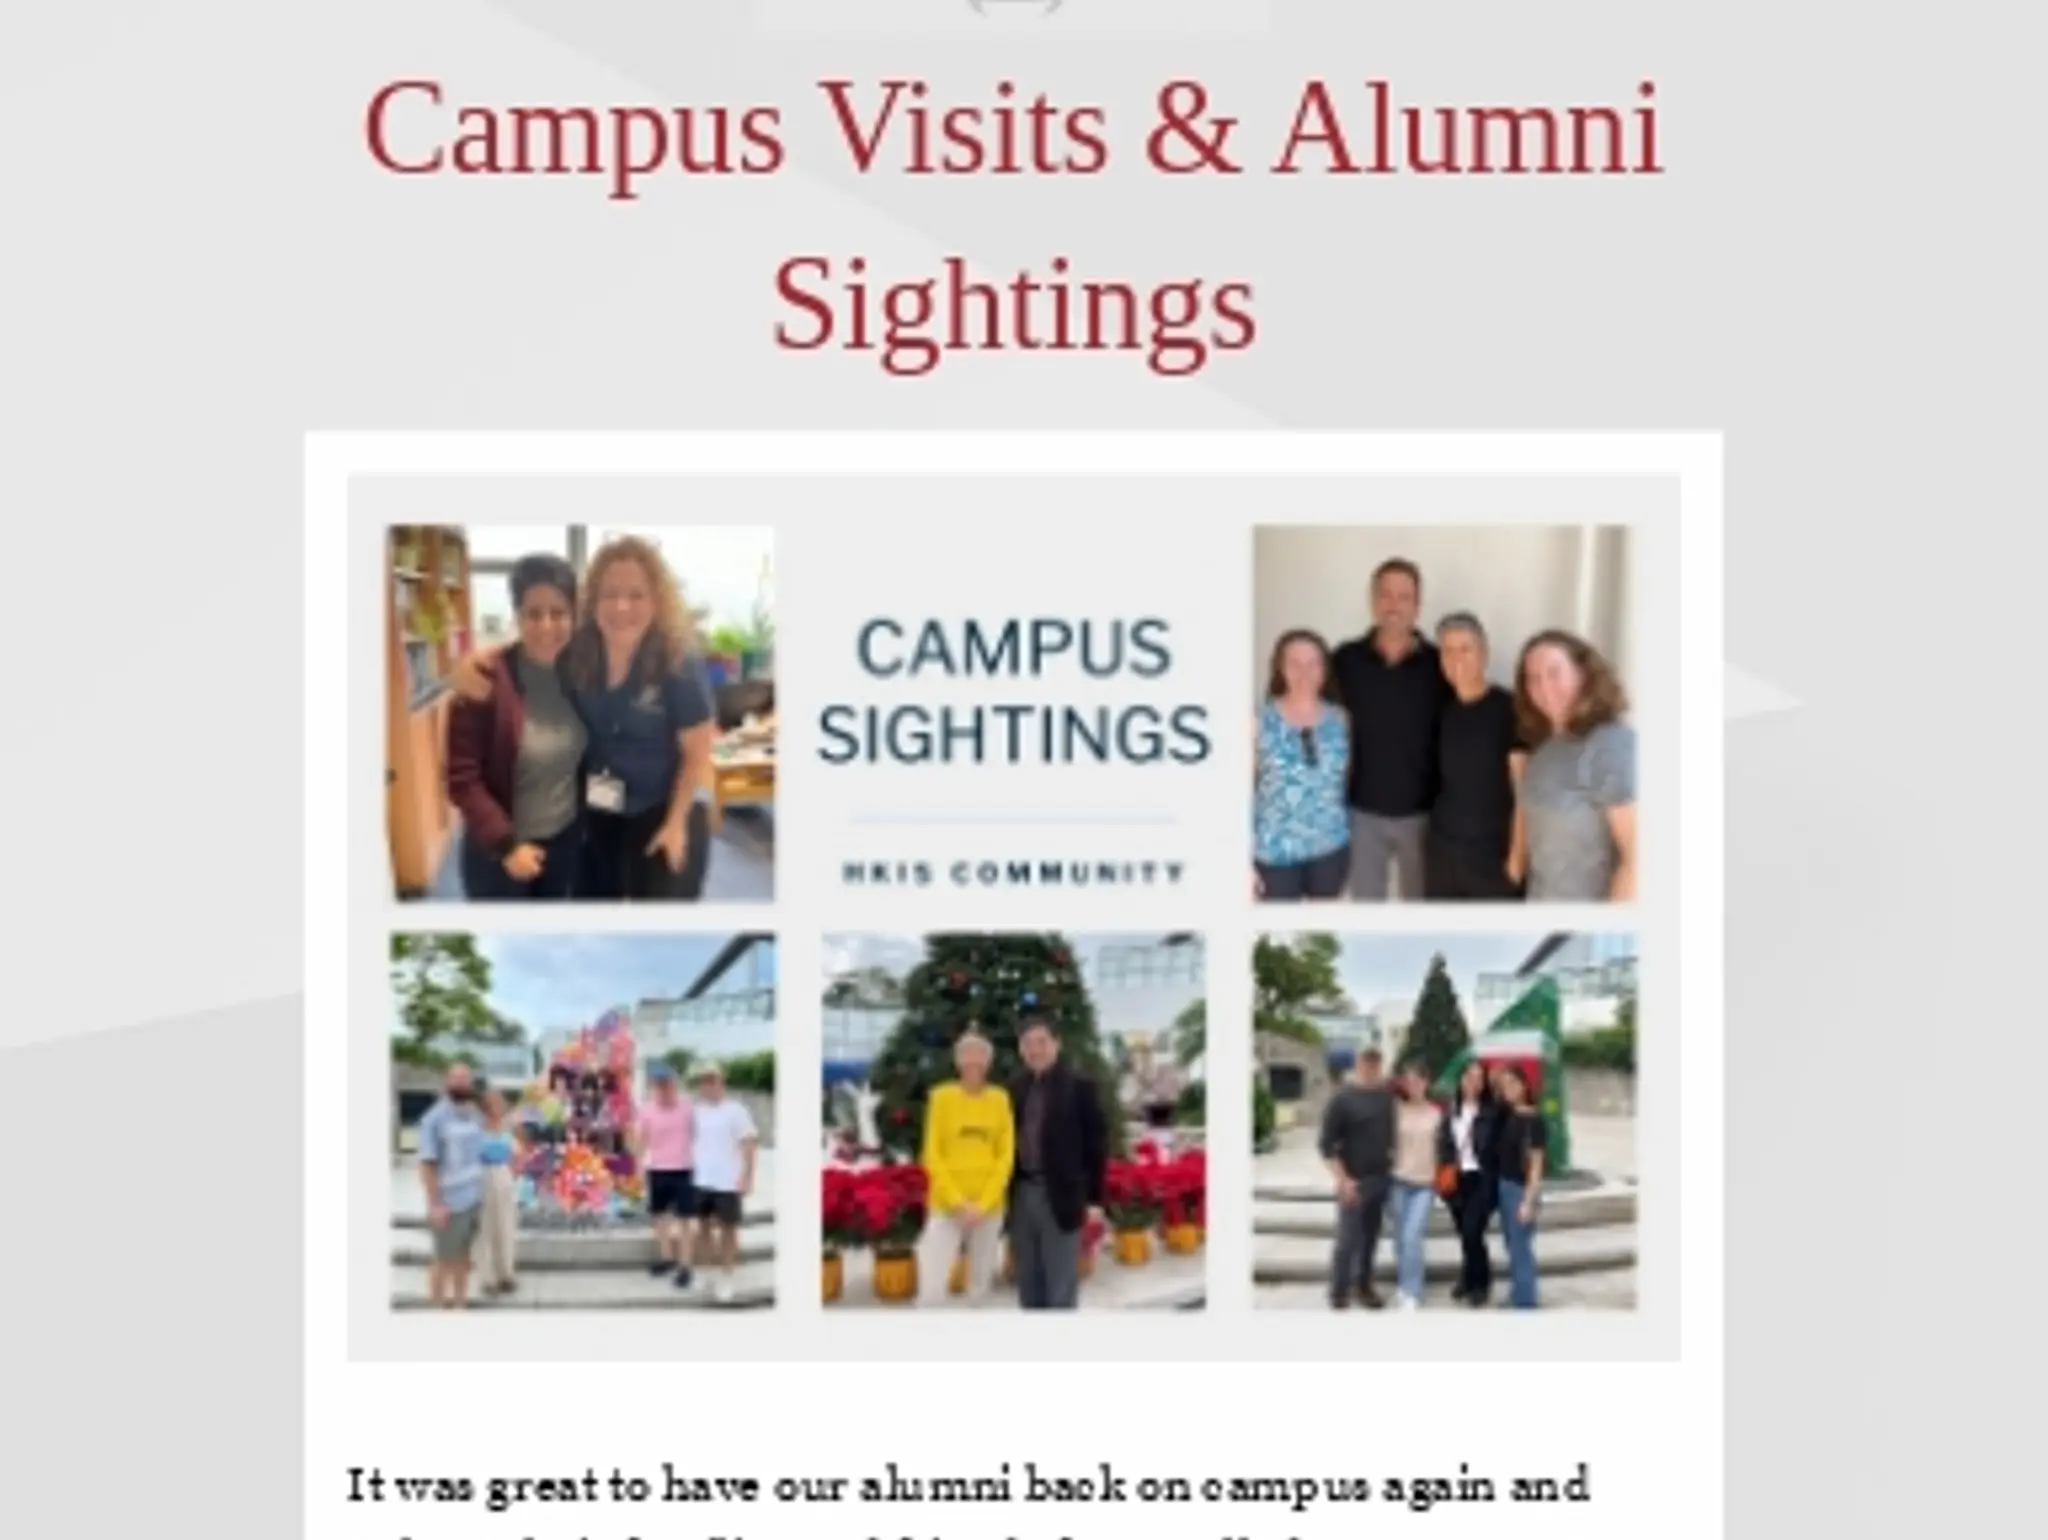 Campus Visits & Alumni Sightings